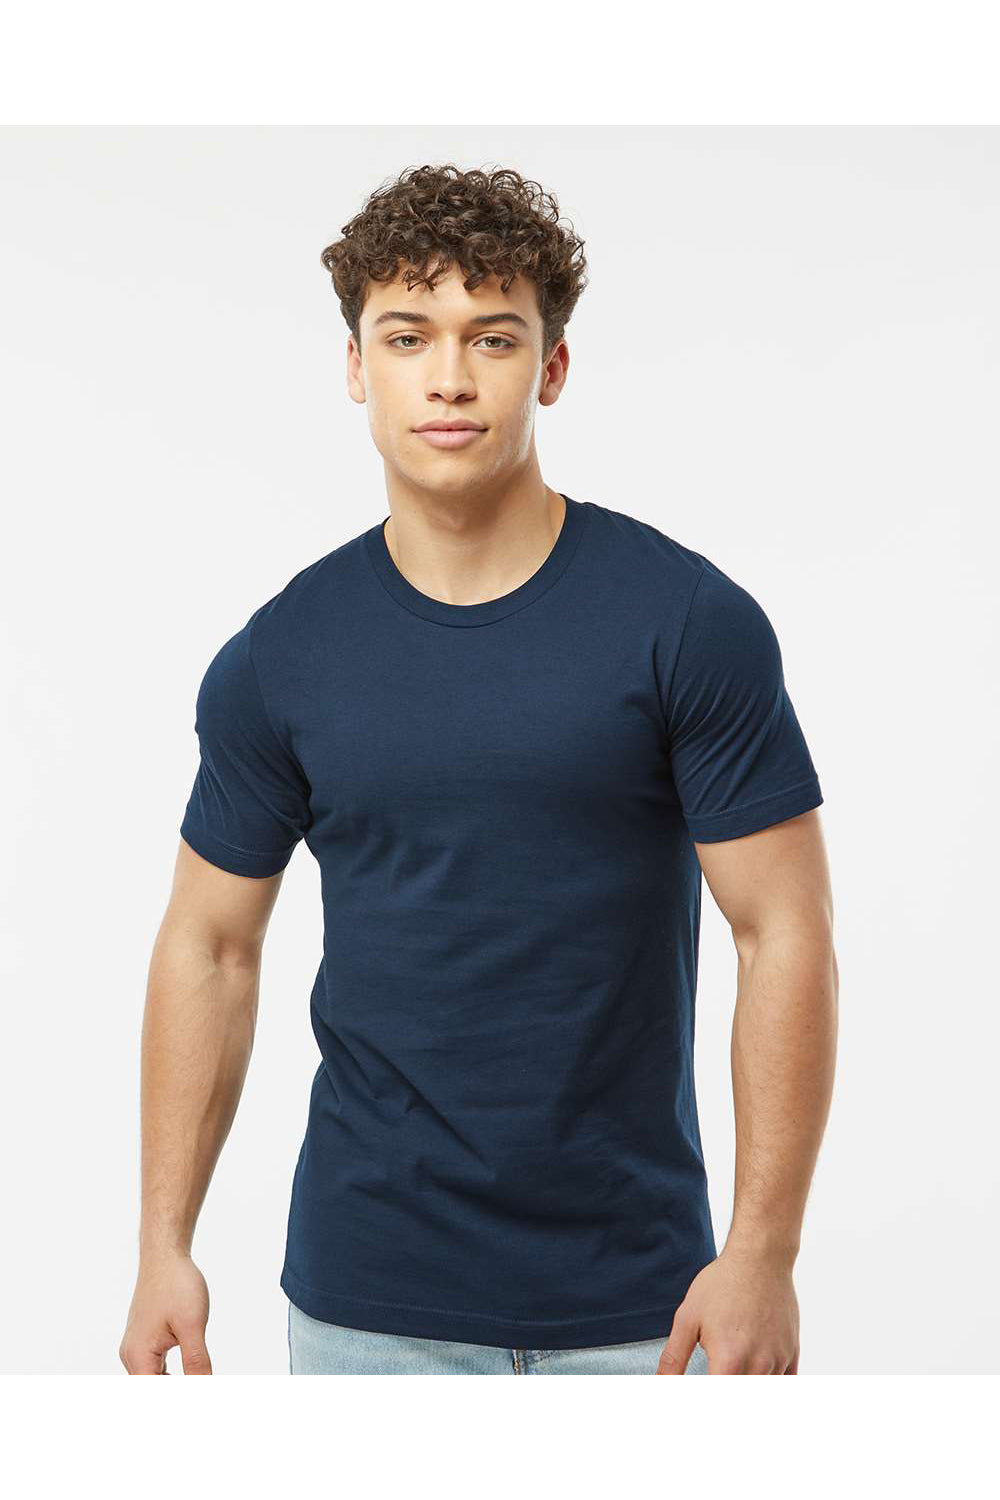 Tultex 502 Mens Premium Short Sleeve Crewneck T-Shirt Navy Blue Model Front